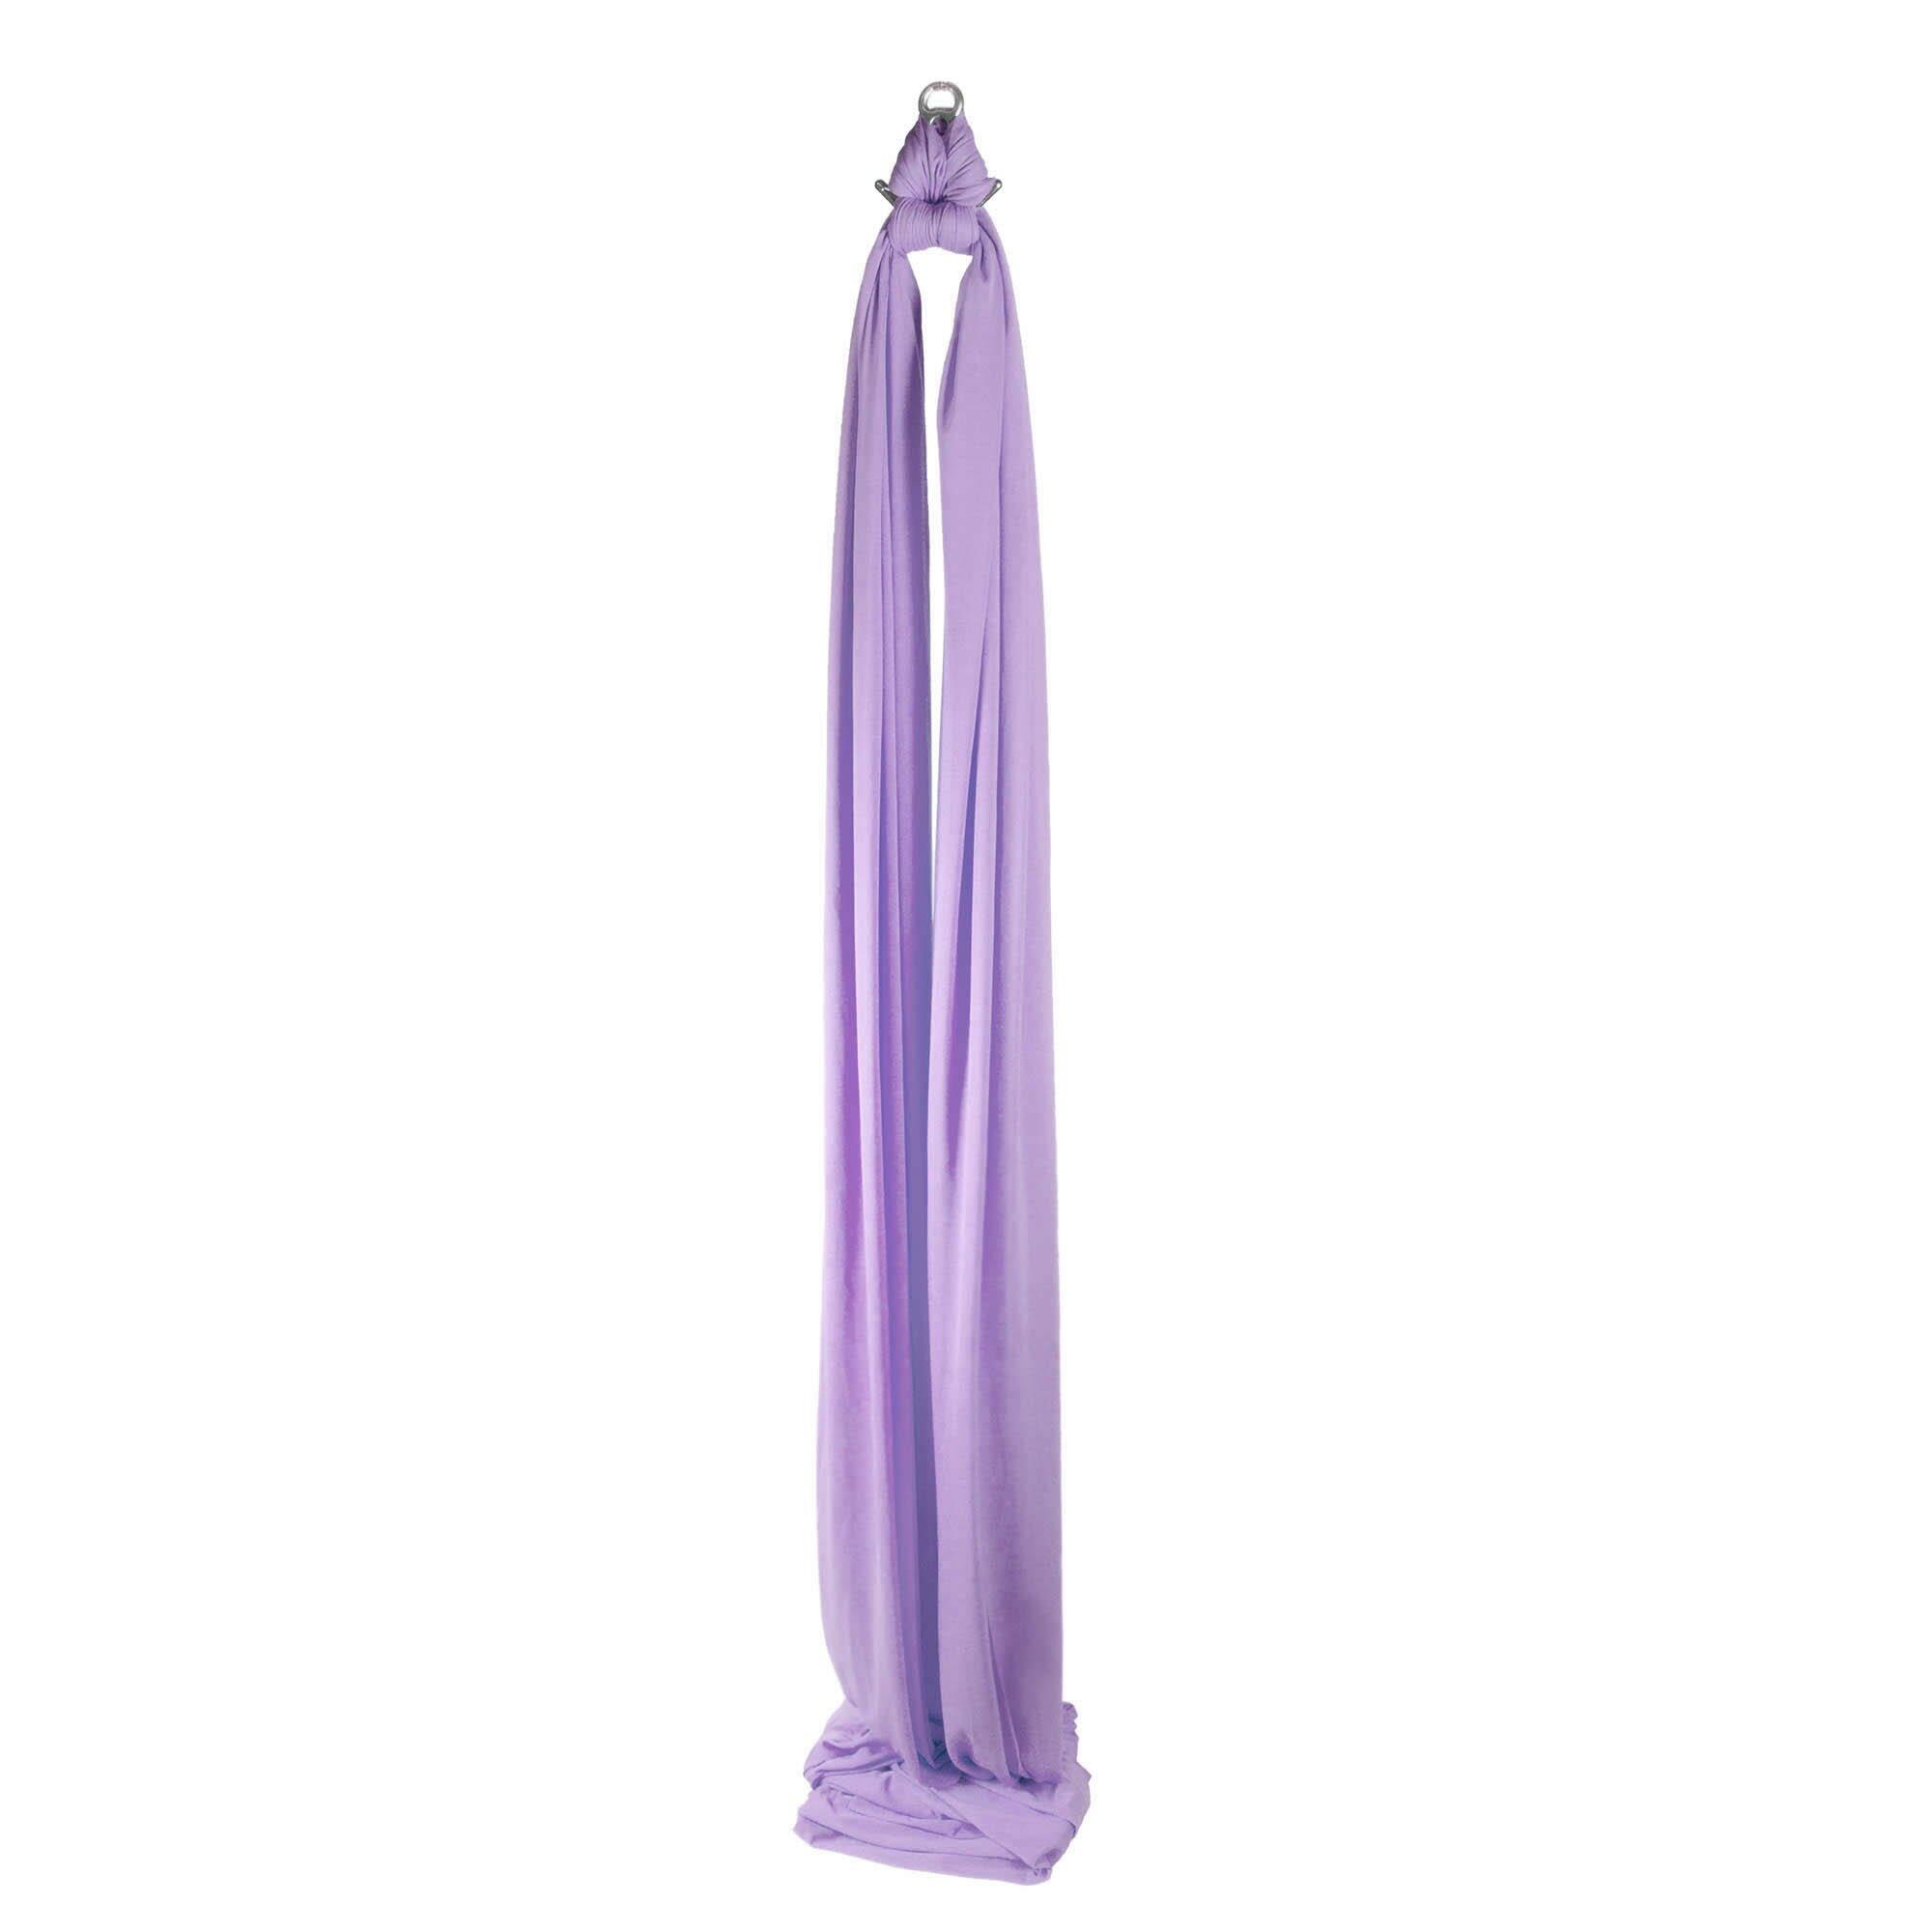 FIRETOYS Firetoys Aerial Silk (Aerial Fabric / Tissus) - Lavender